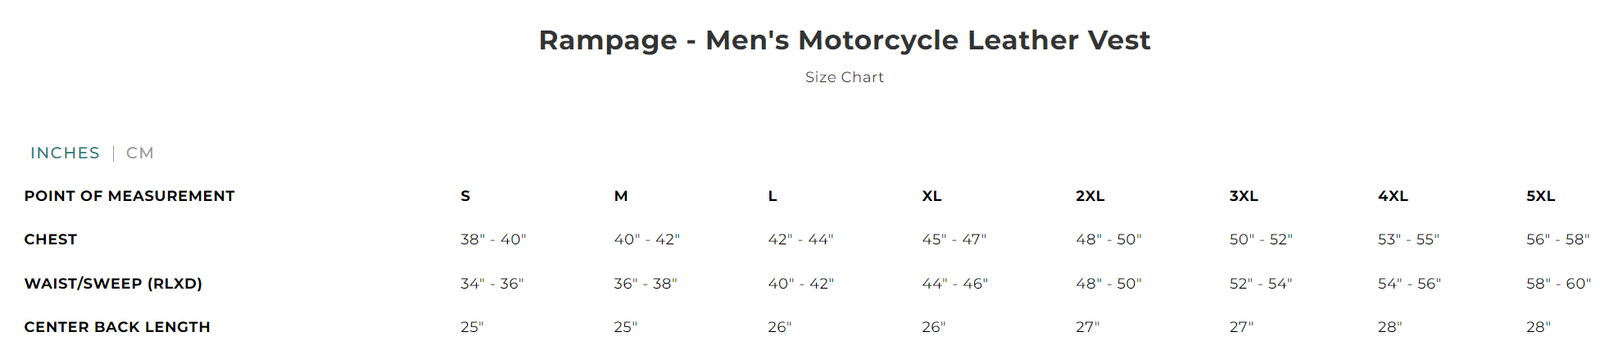 Size chart for Rampage, men's leather biker vest.